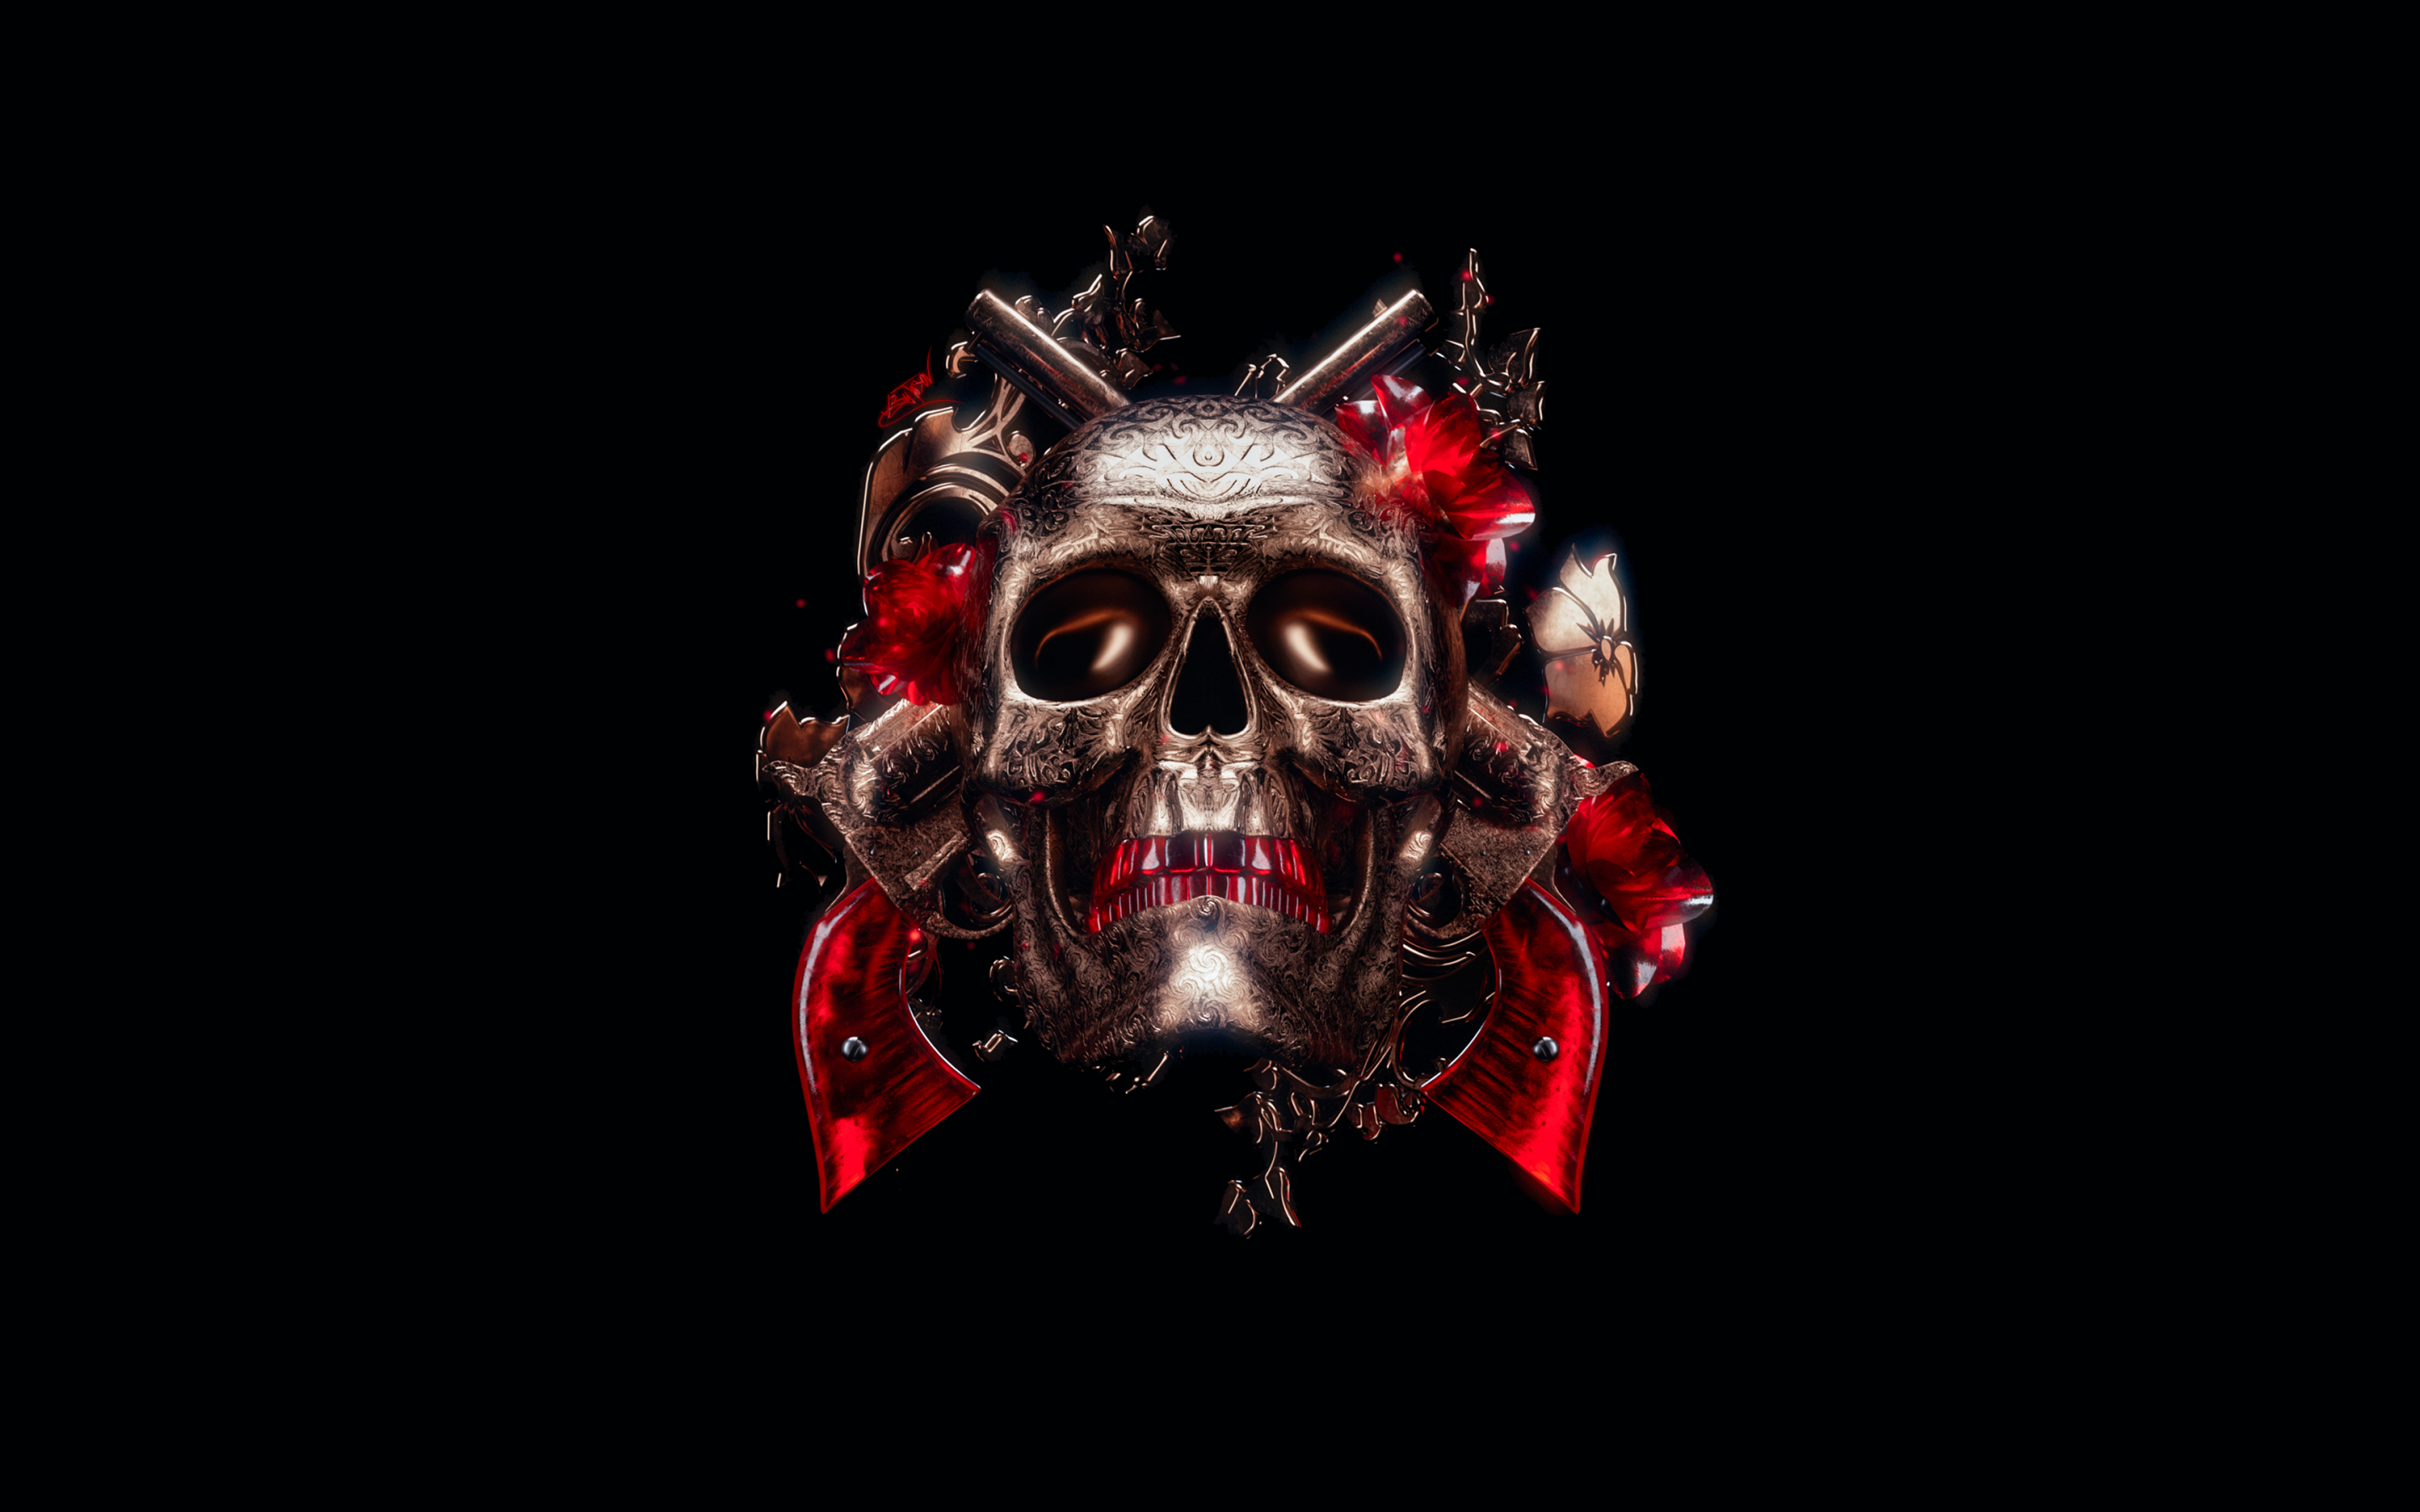 Skull 4K Wallpaper, 3D, Black background, Graphics CGI